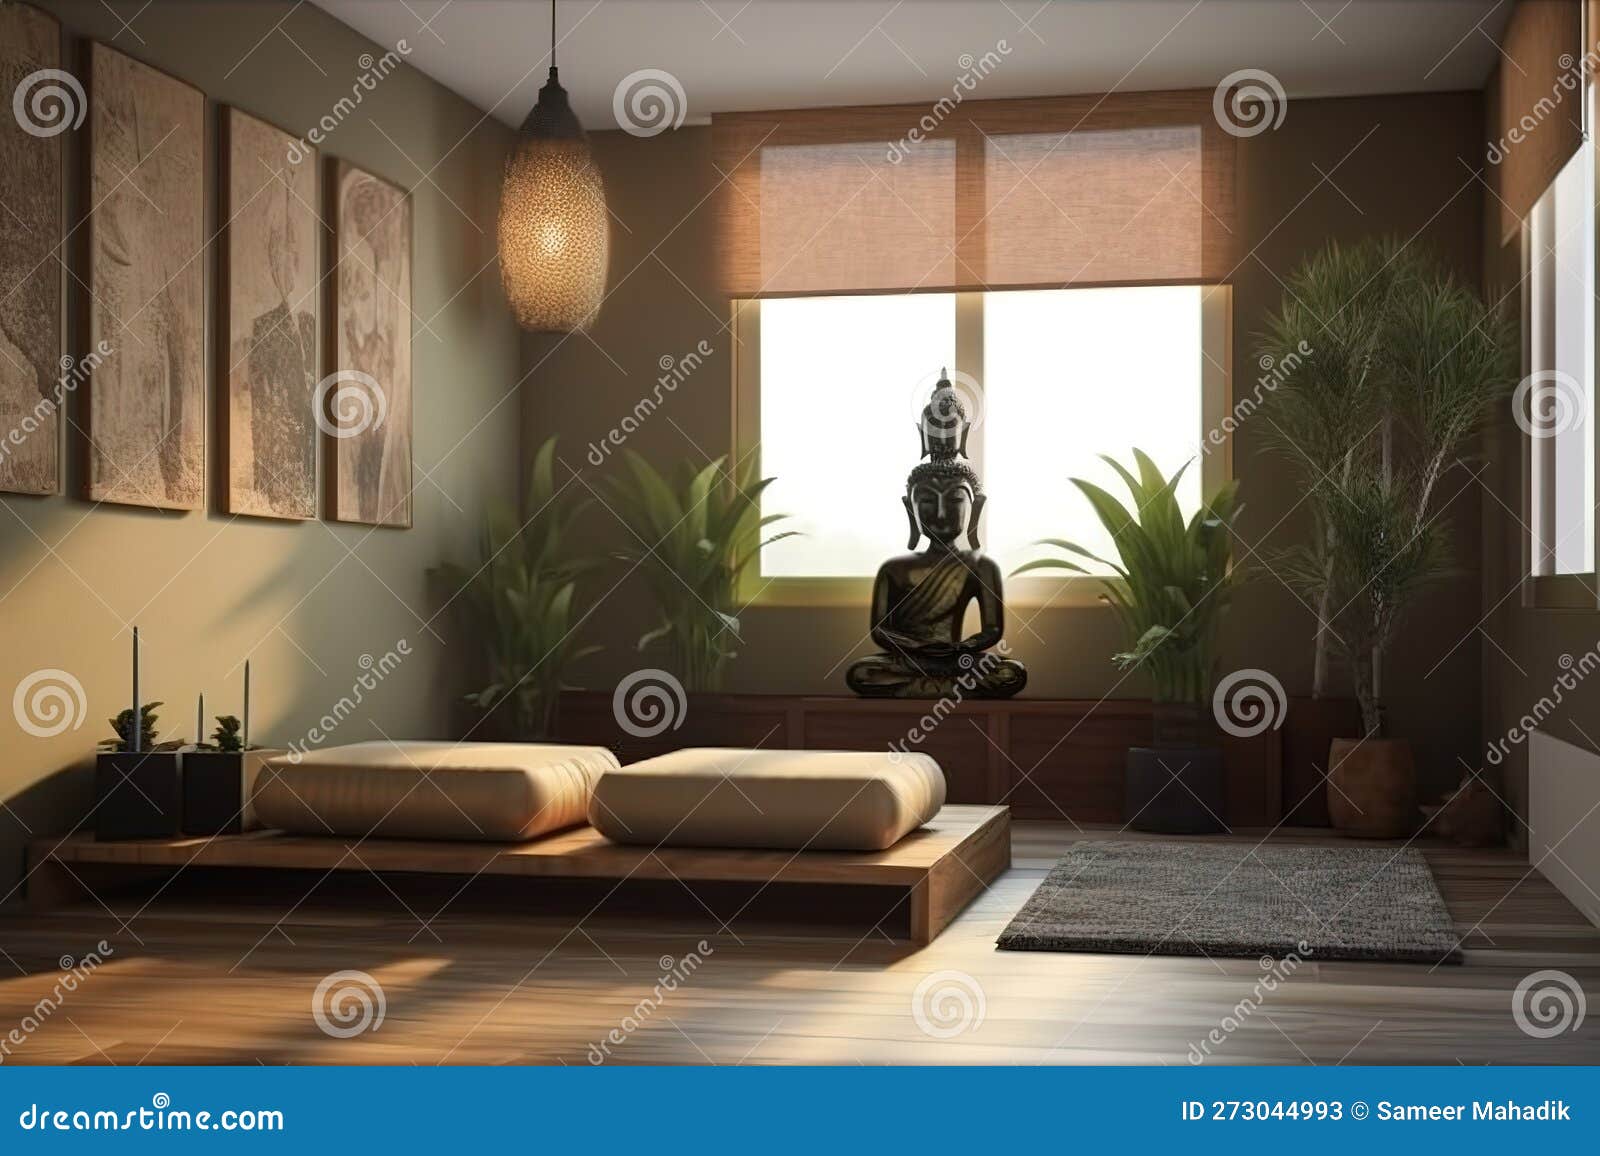 25+ Meditation Room Ideas for a Peaceful Retreat